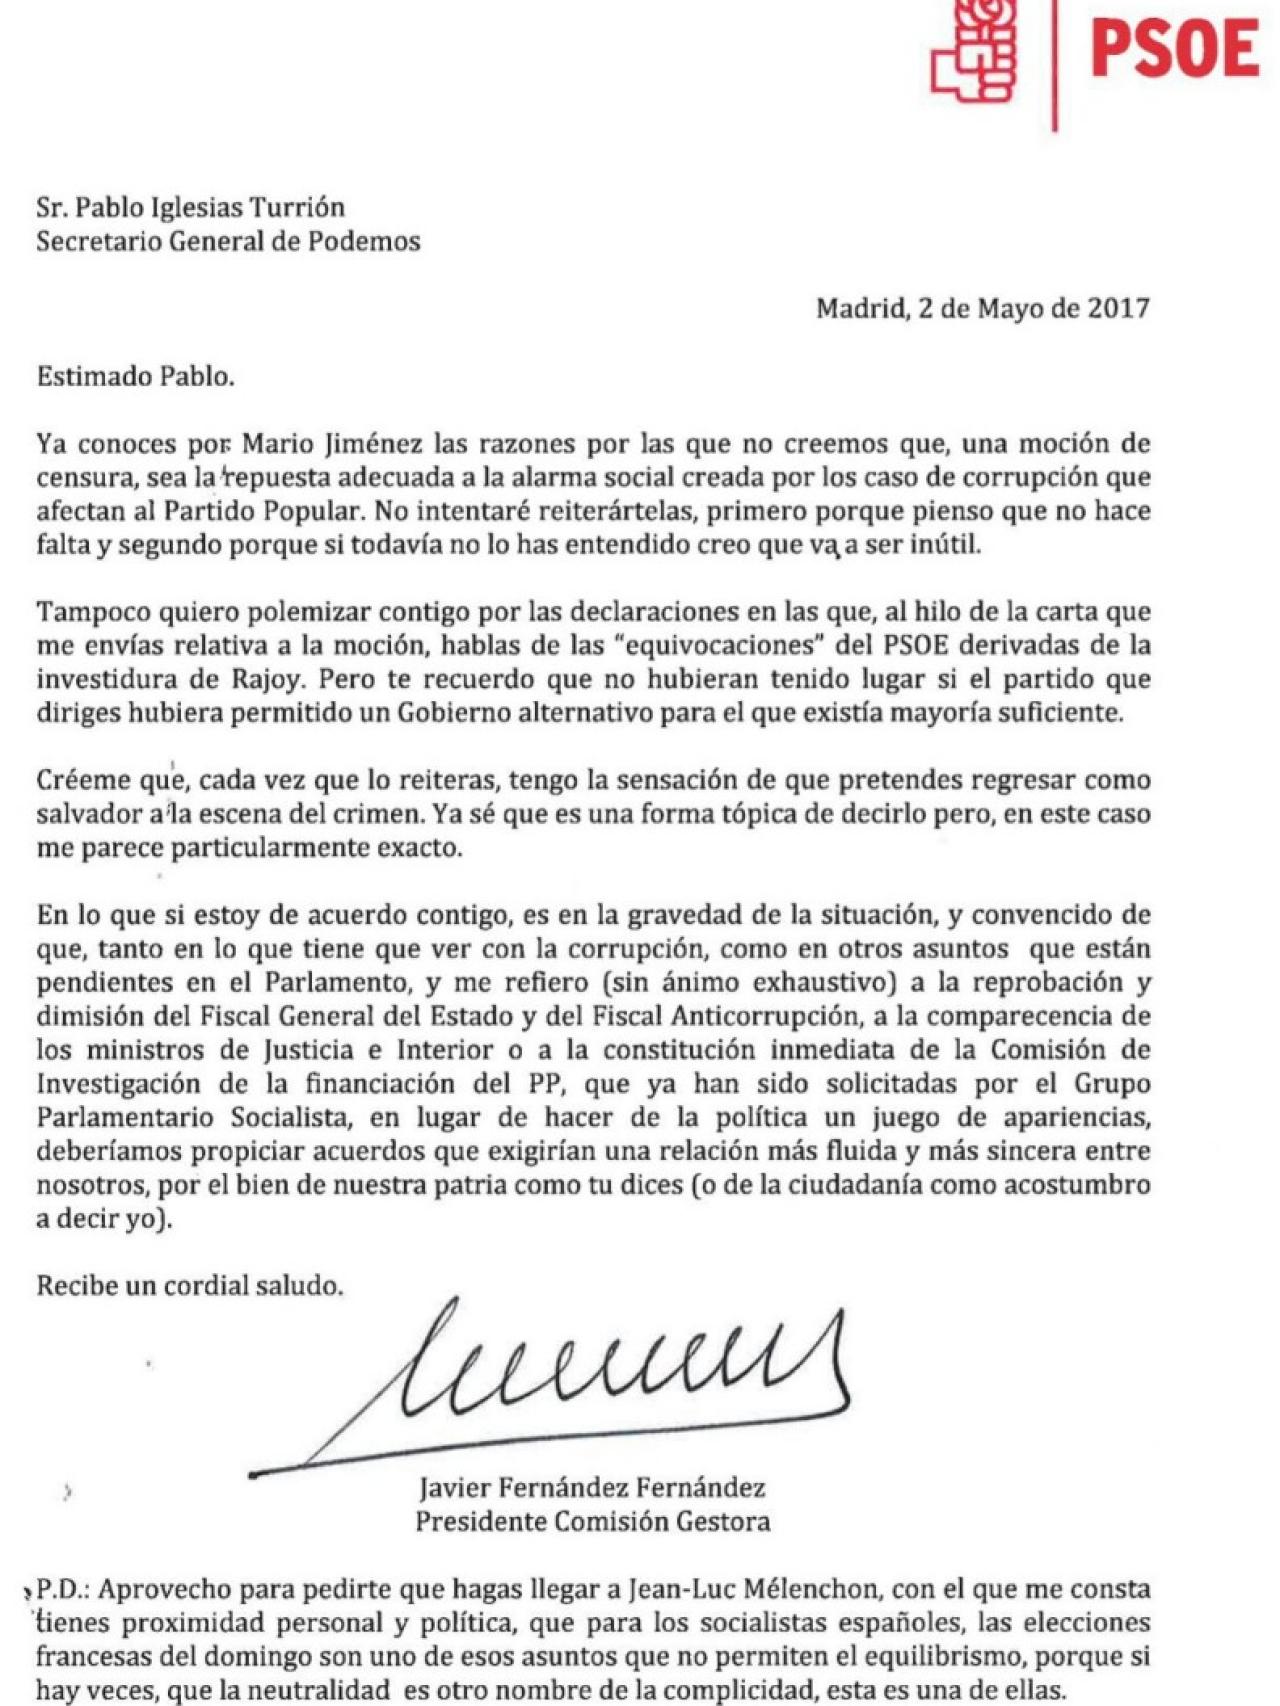 Carta de Javier Fernández a Pablo Iglesias.